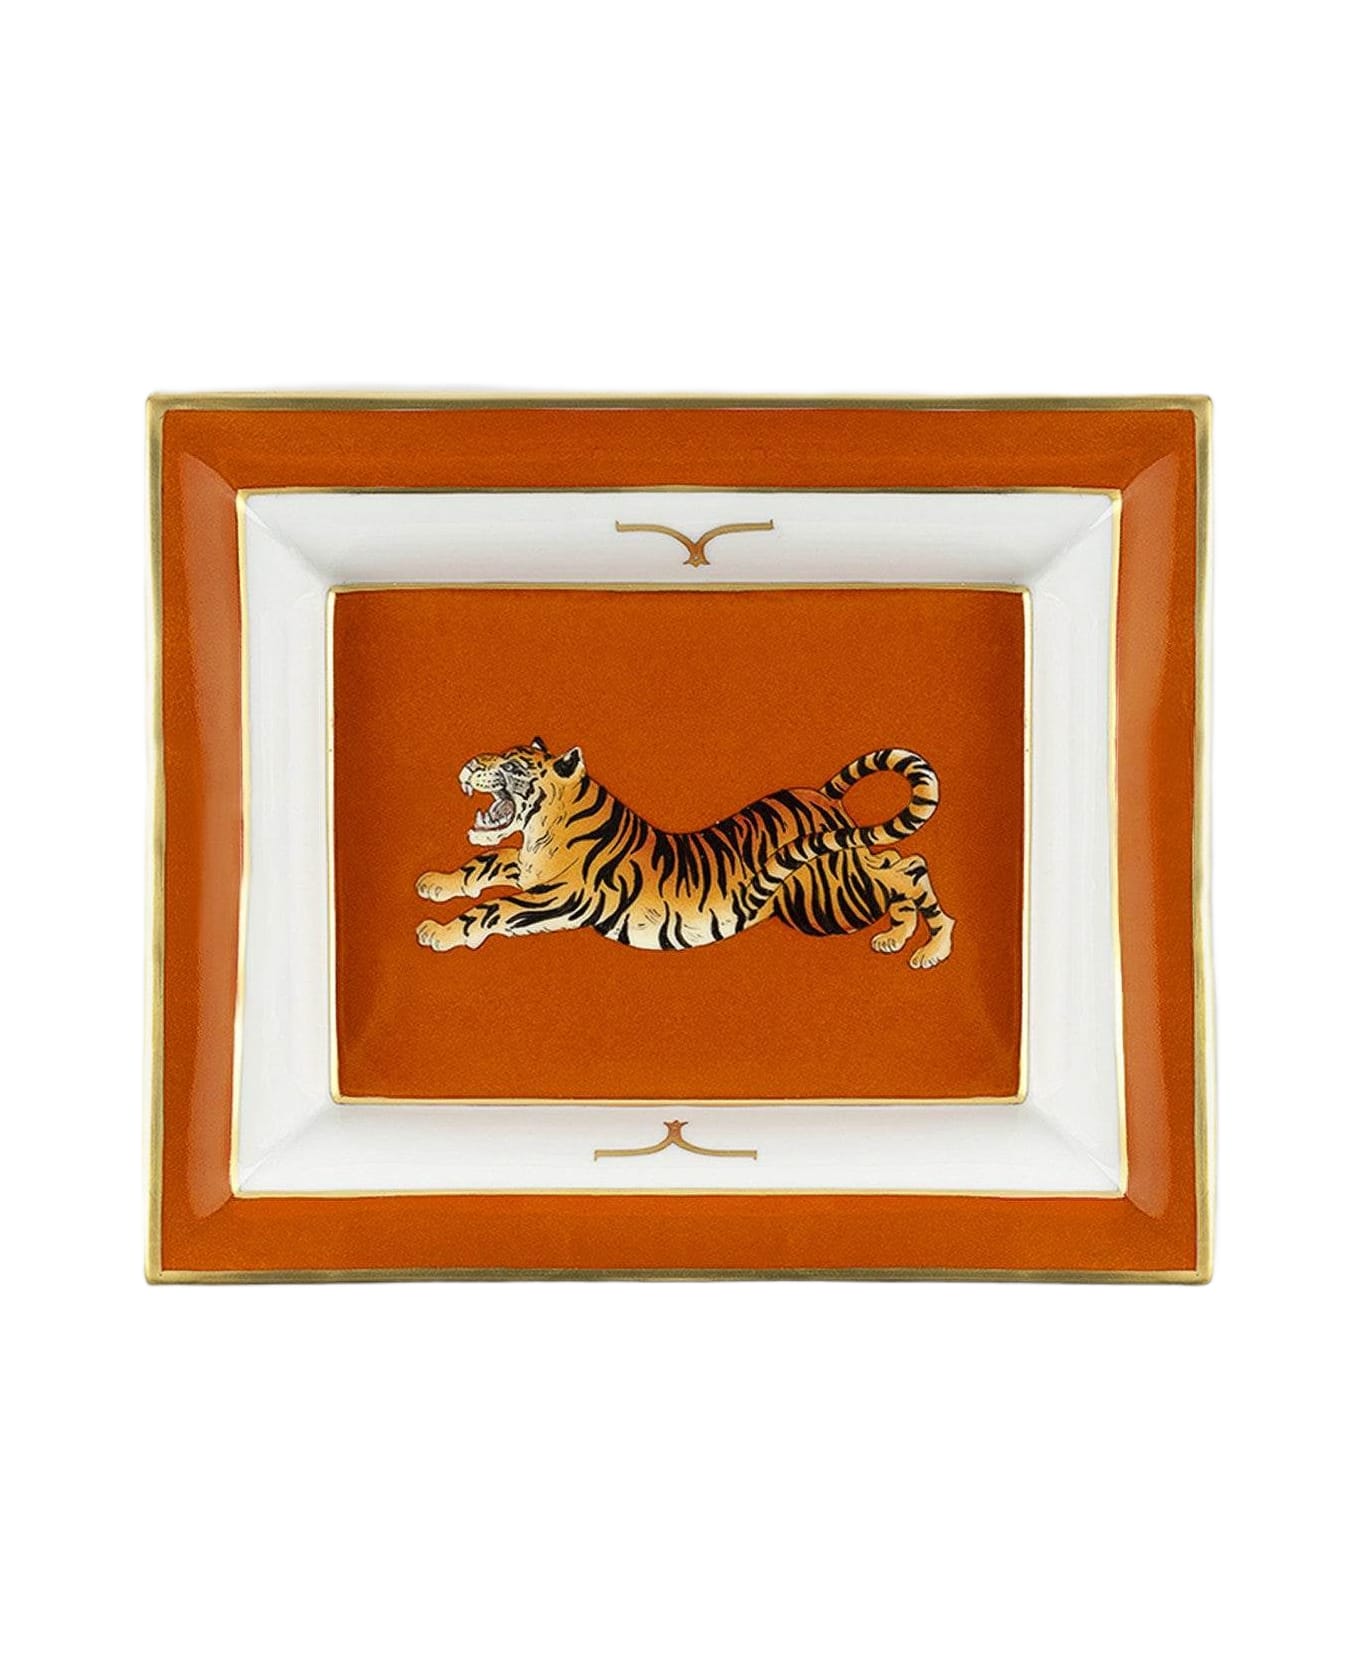 Larusmiani Pocket Emptier 'tigre' Tray - Orange